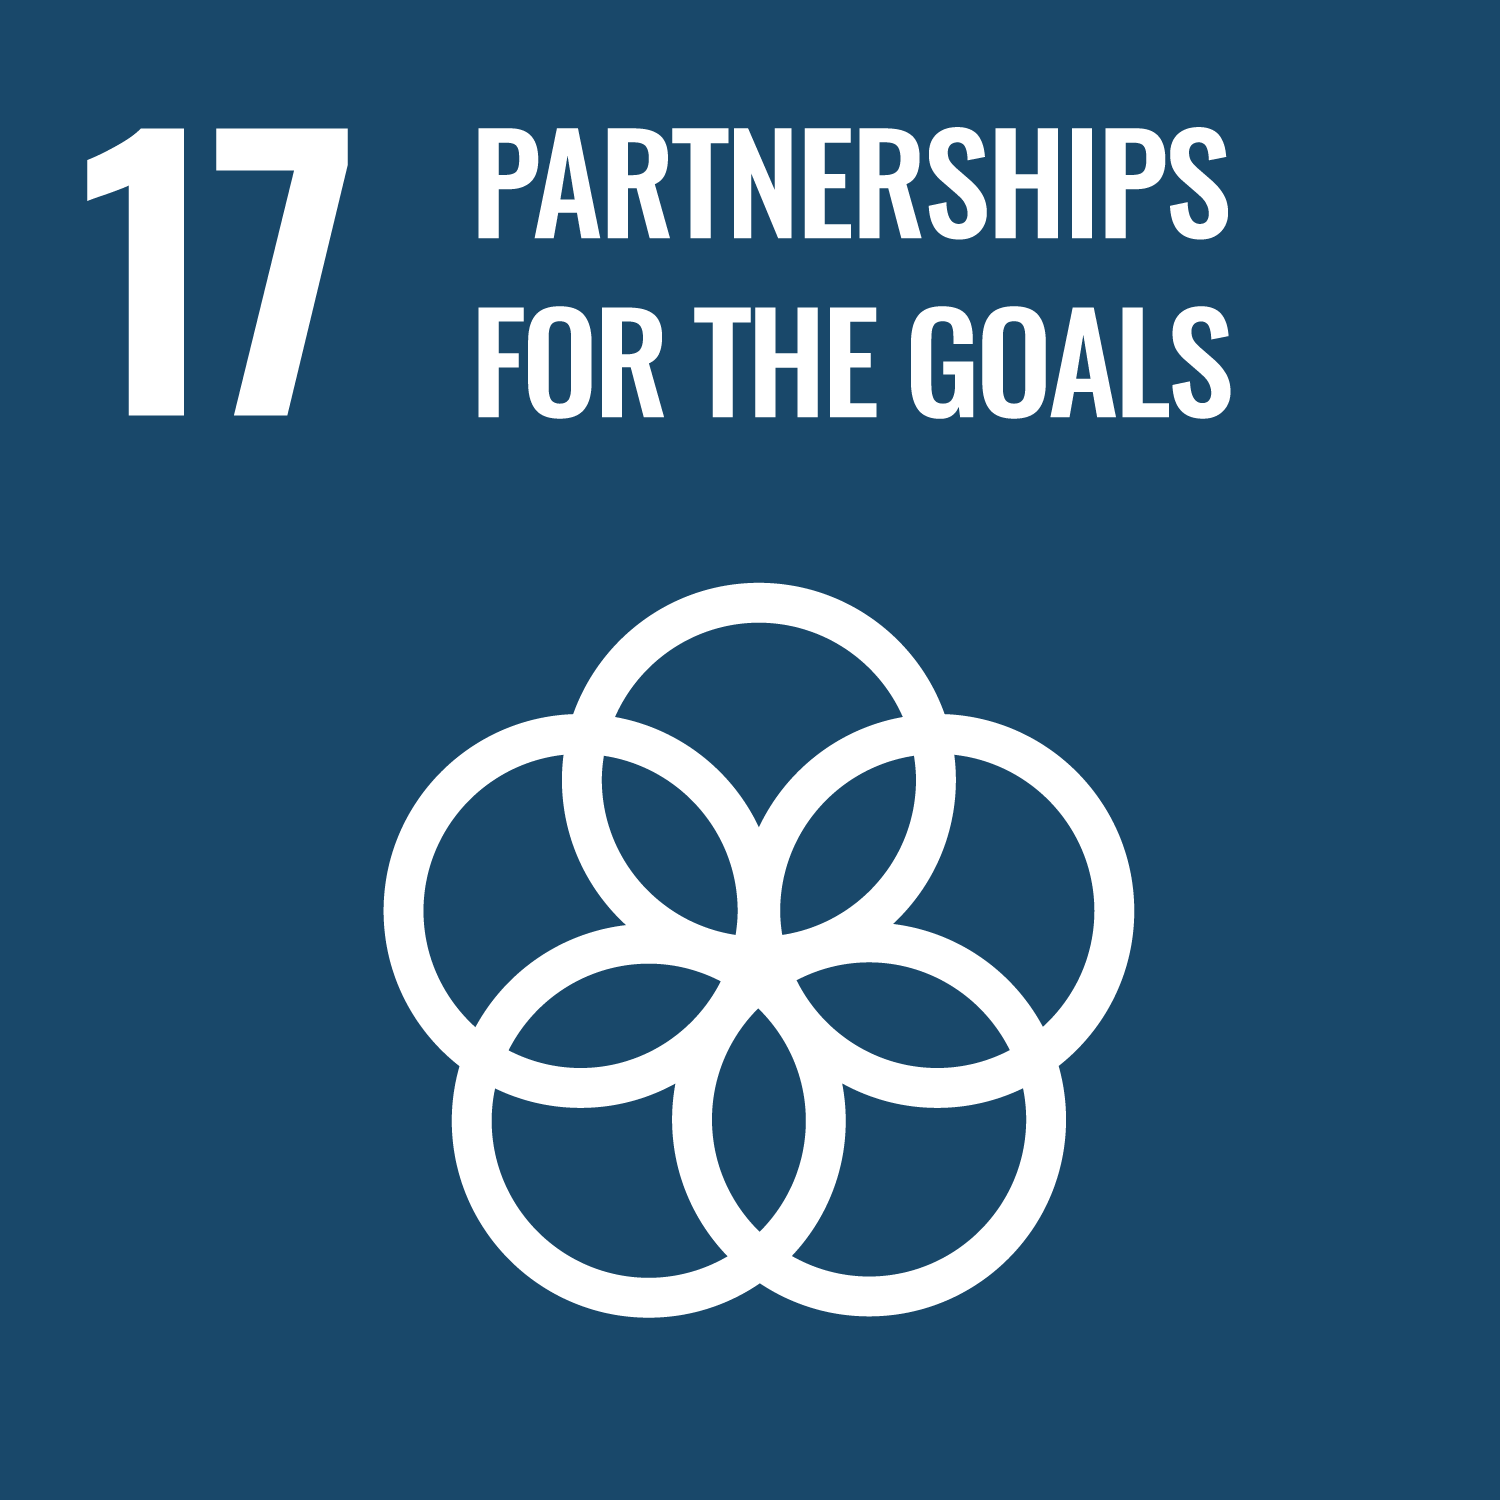 Partnerships for the goals logo.